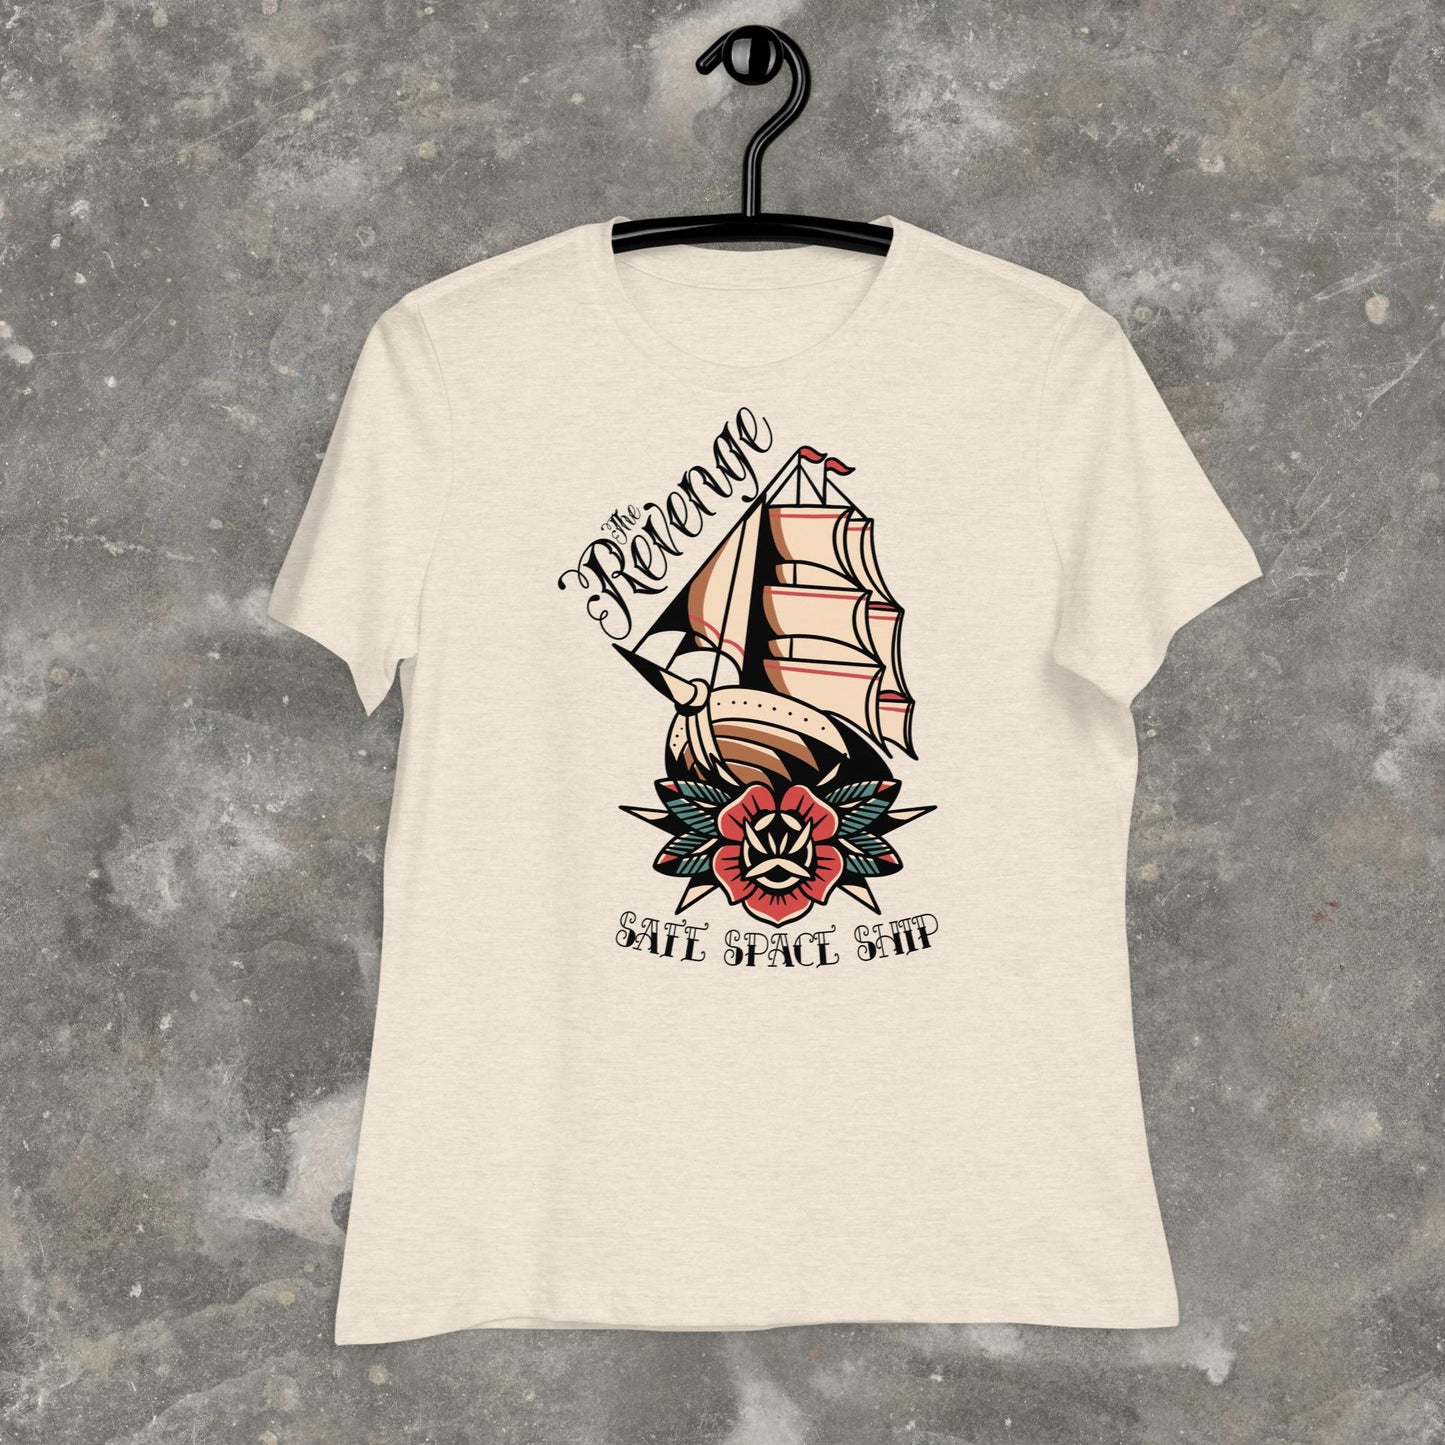 OFMD Our Flag Means Death Blackbonnet Safe Space Ship Revenge Tattoo Femme Fit Relaxed T-Shirt